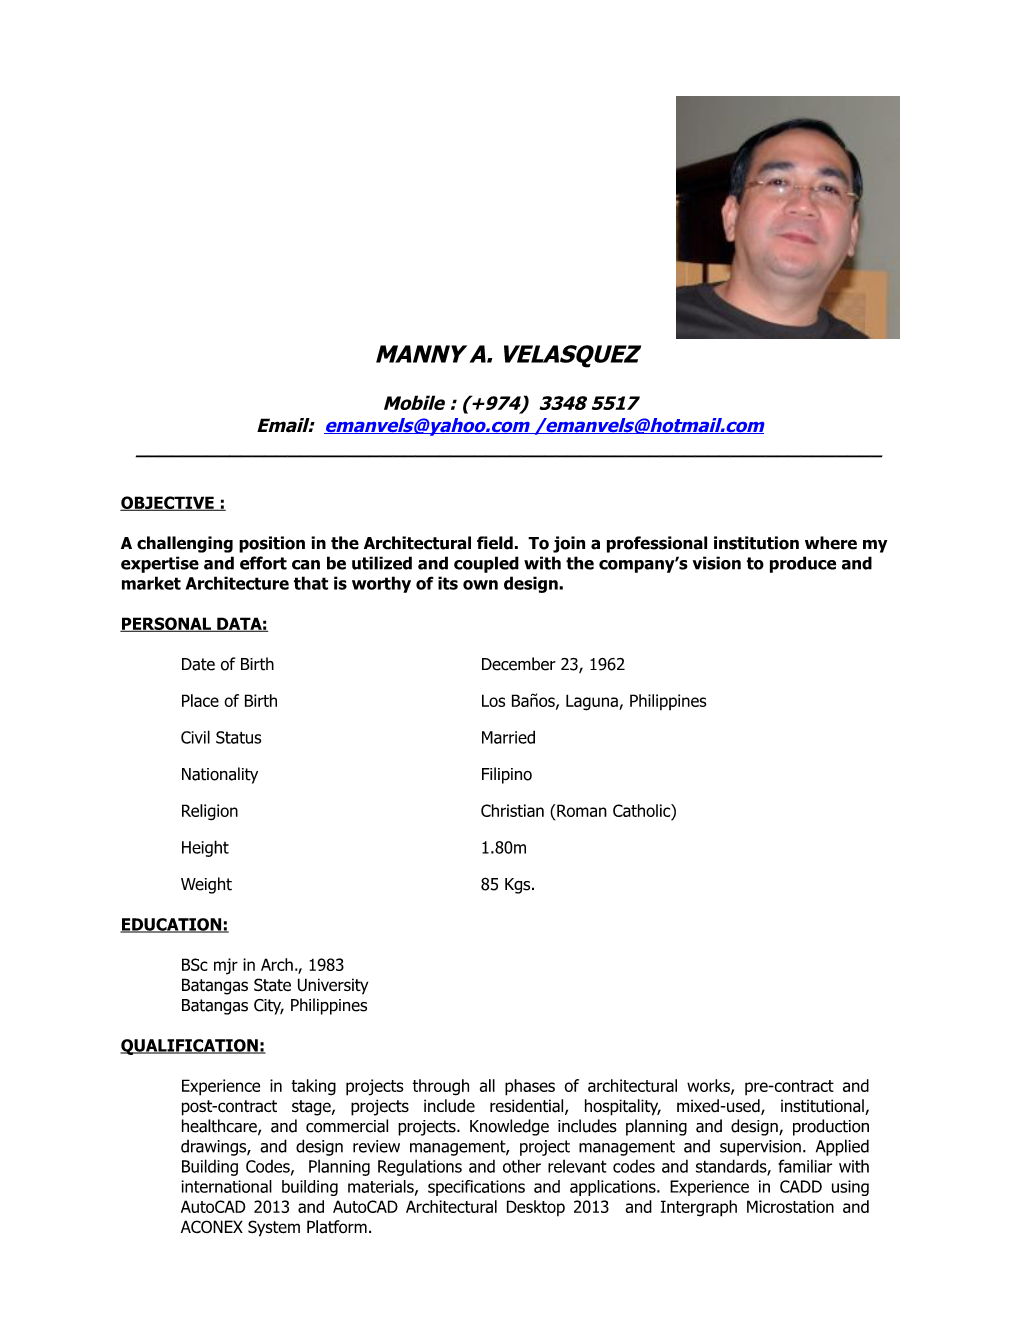 Manny A. Velasquez